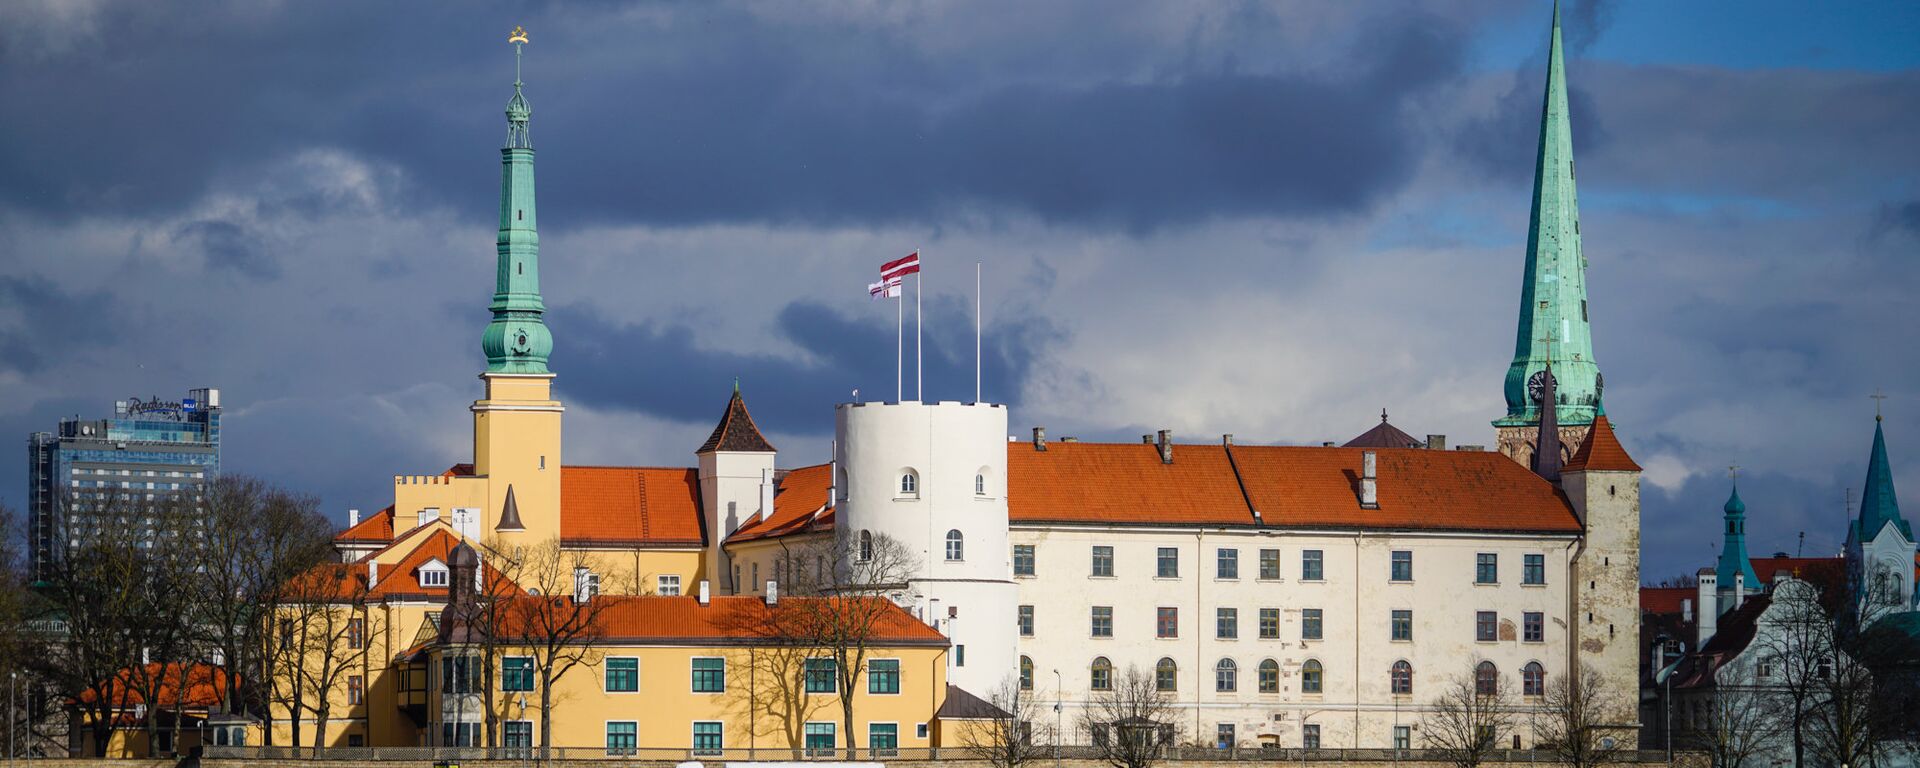 Рижский замок, резиденция президента Латвии - Sputnik Latvija, 1920, 02.03.2021